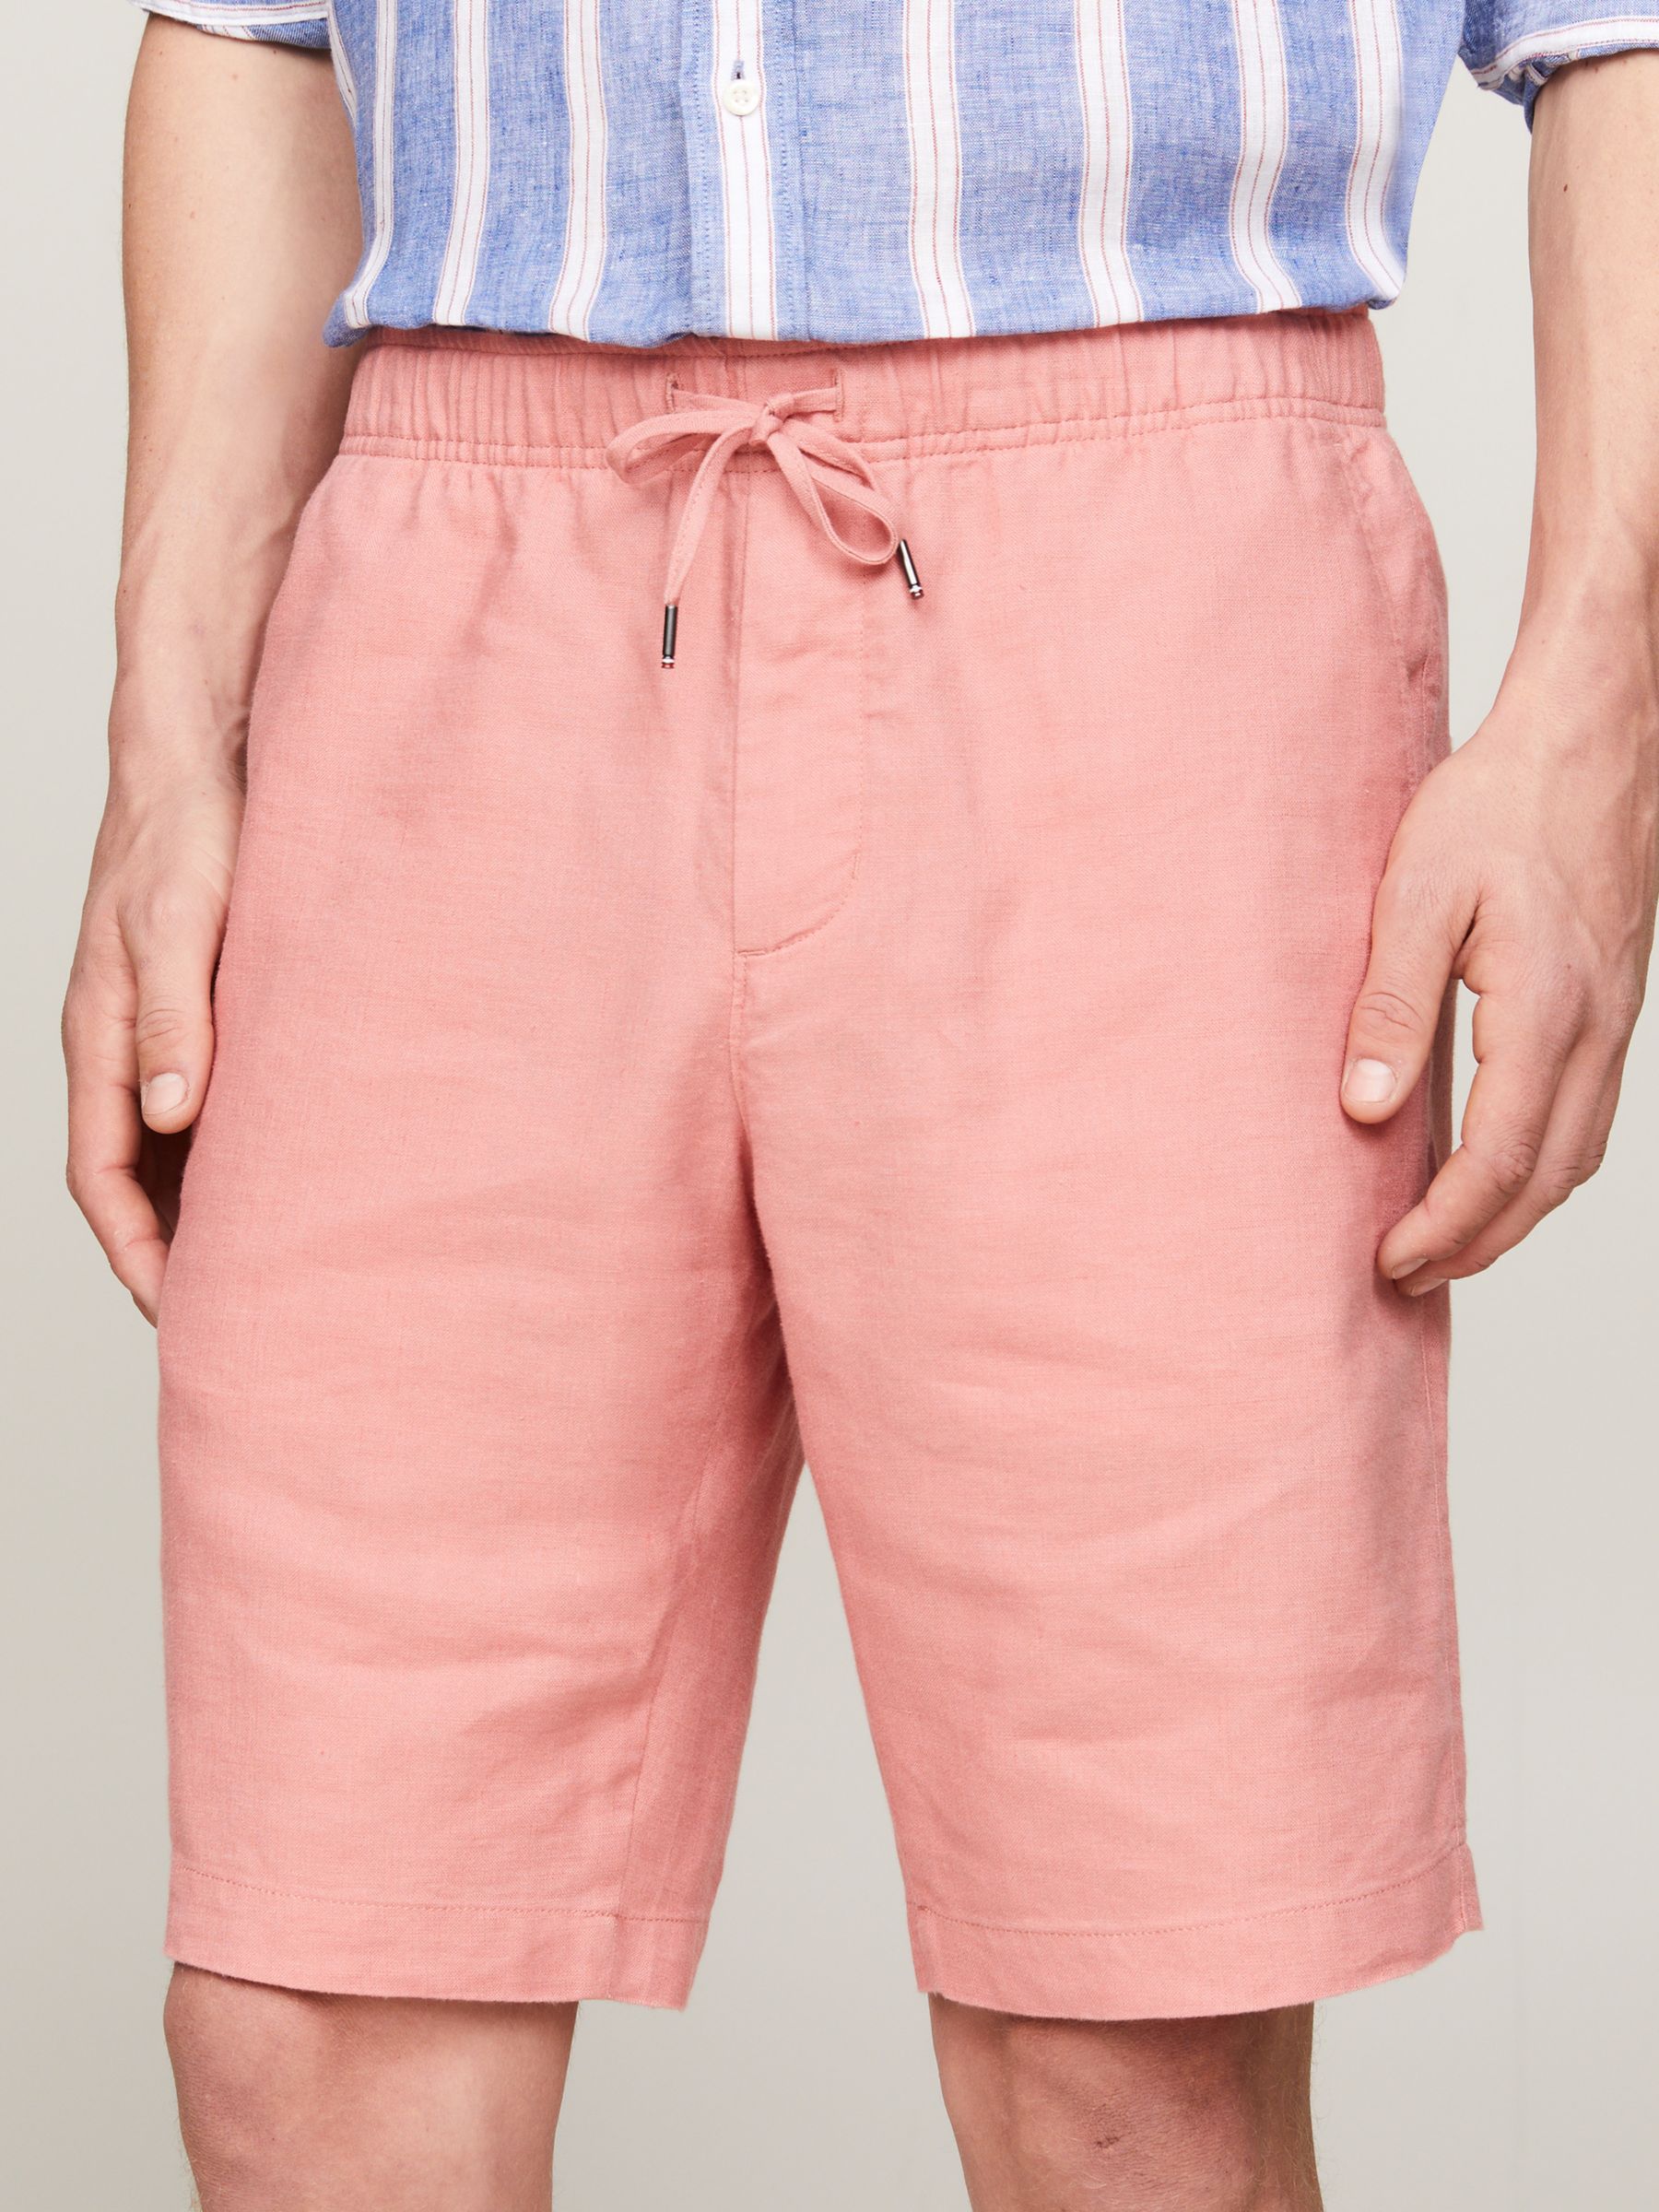 Tommy Hilfiger Harlem Linen Shorts, Teaberry Blossom, 30R